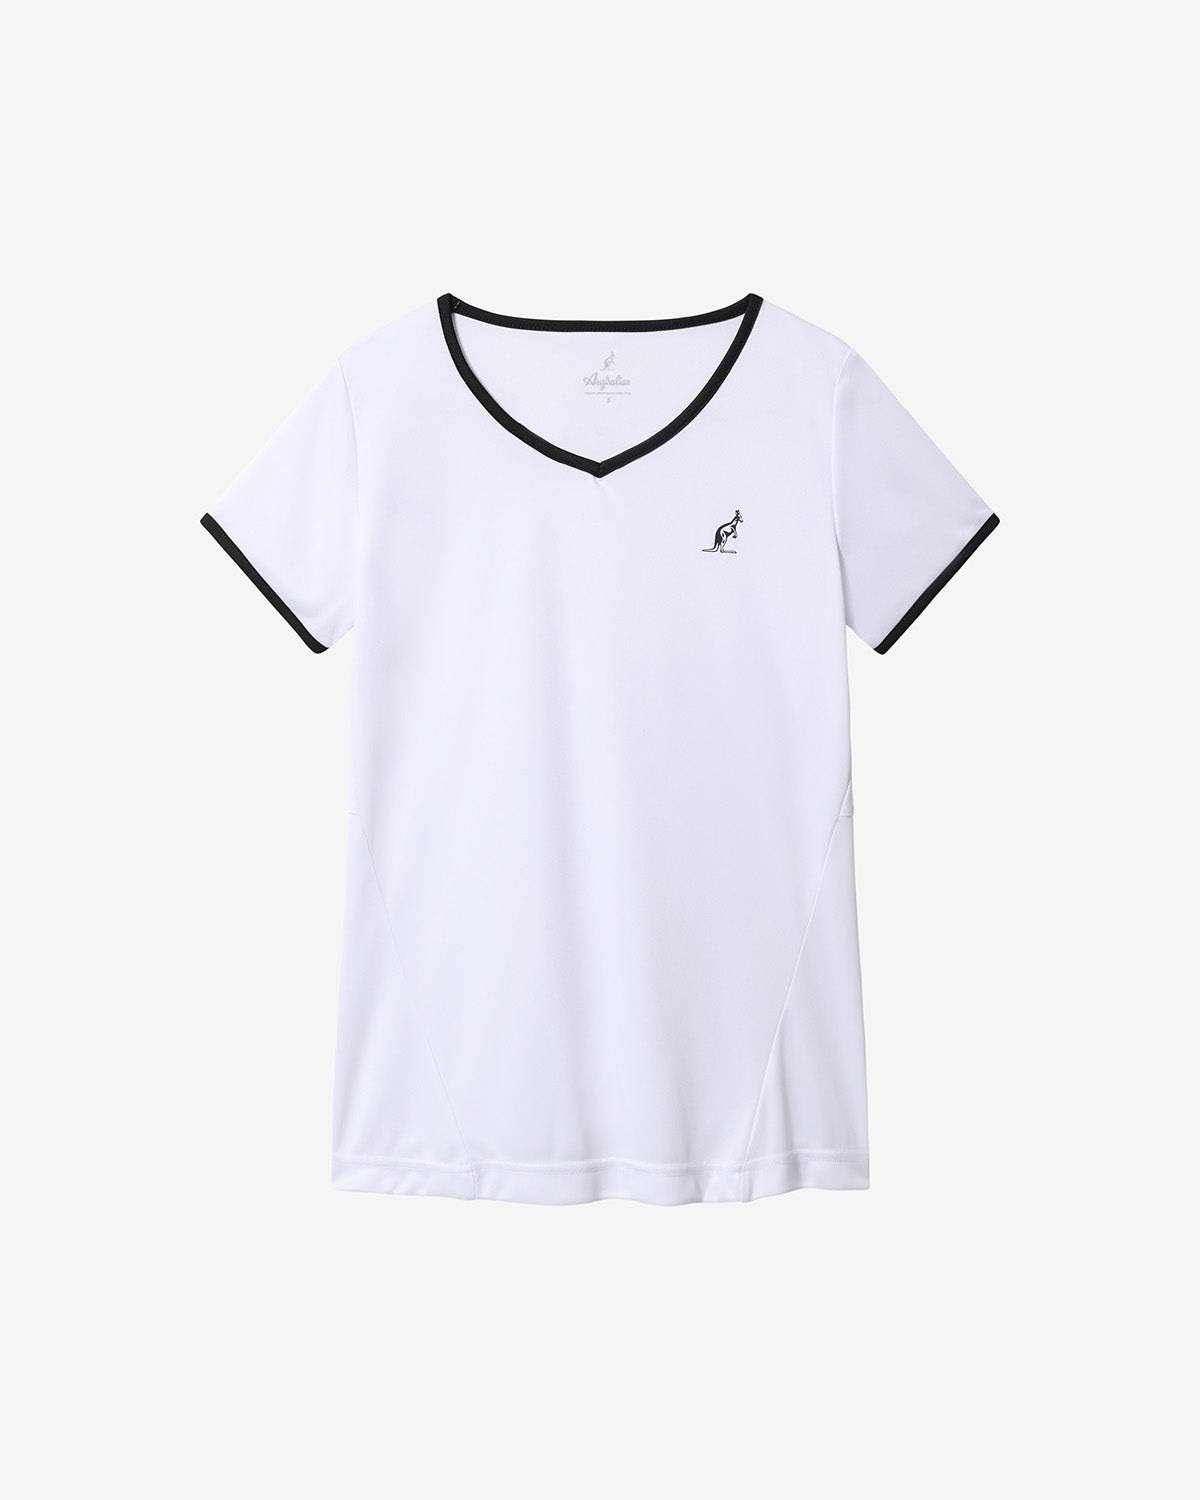 Slash Essence T-shirt: Australian Tennis